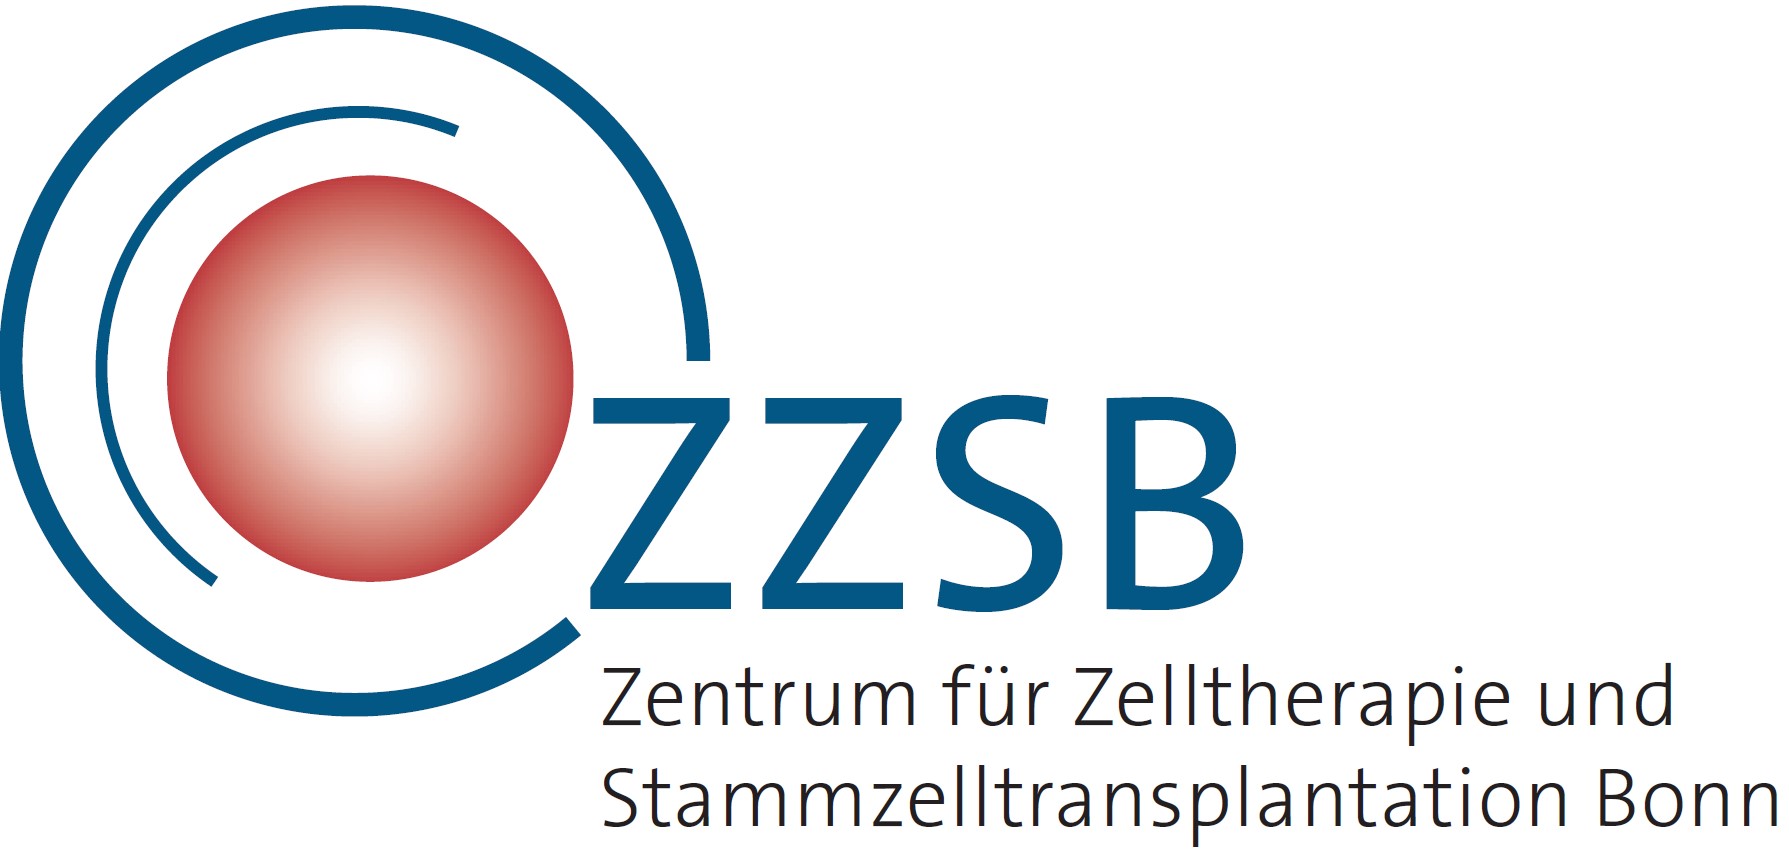 ZZSB Logo